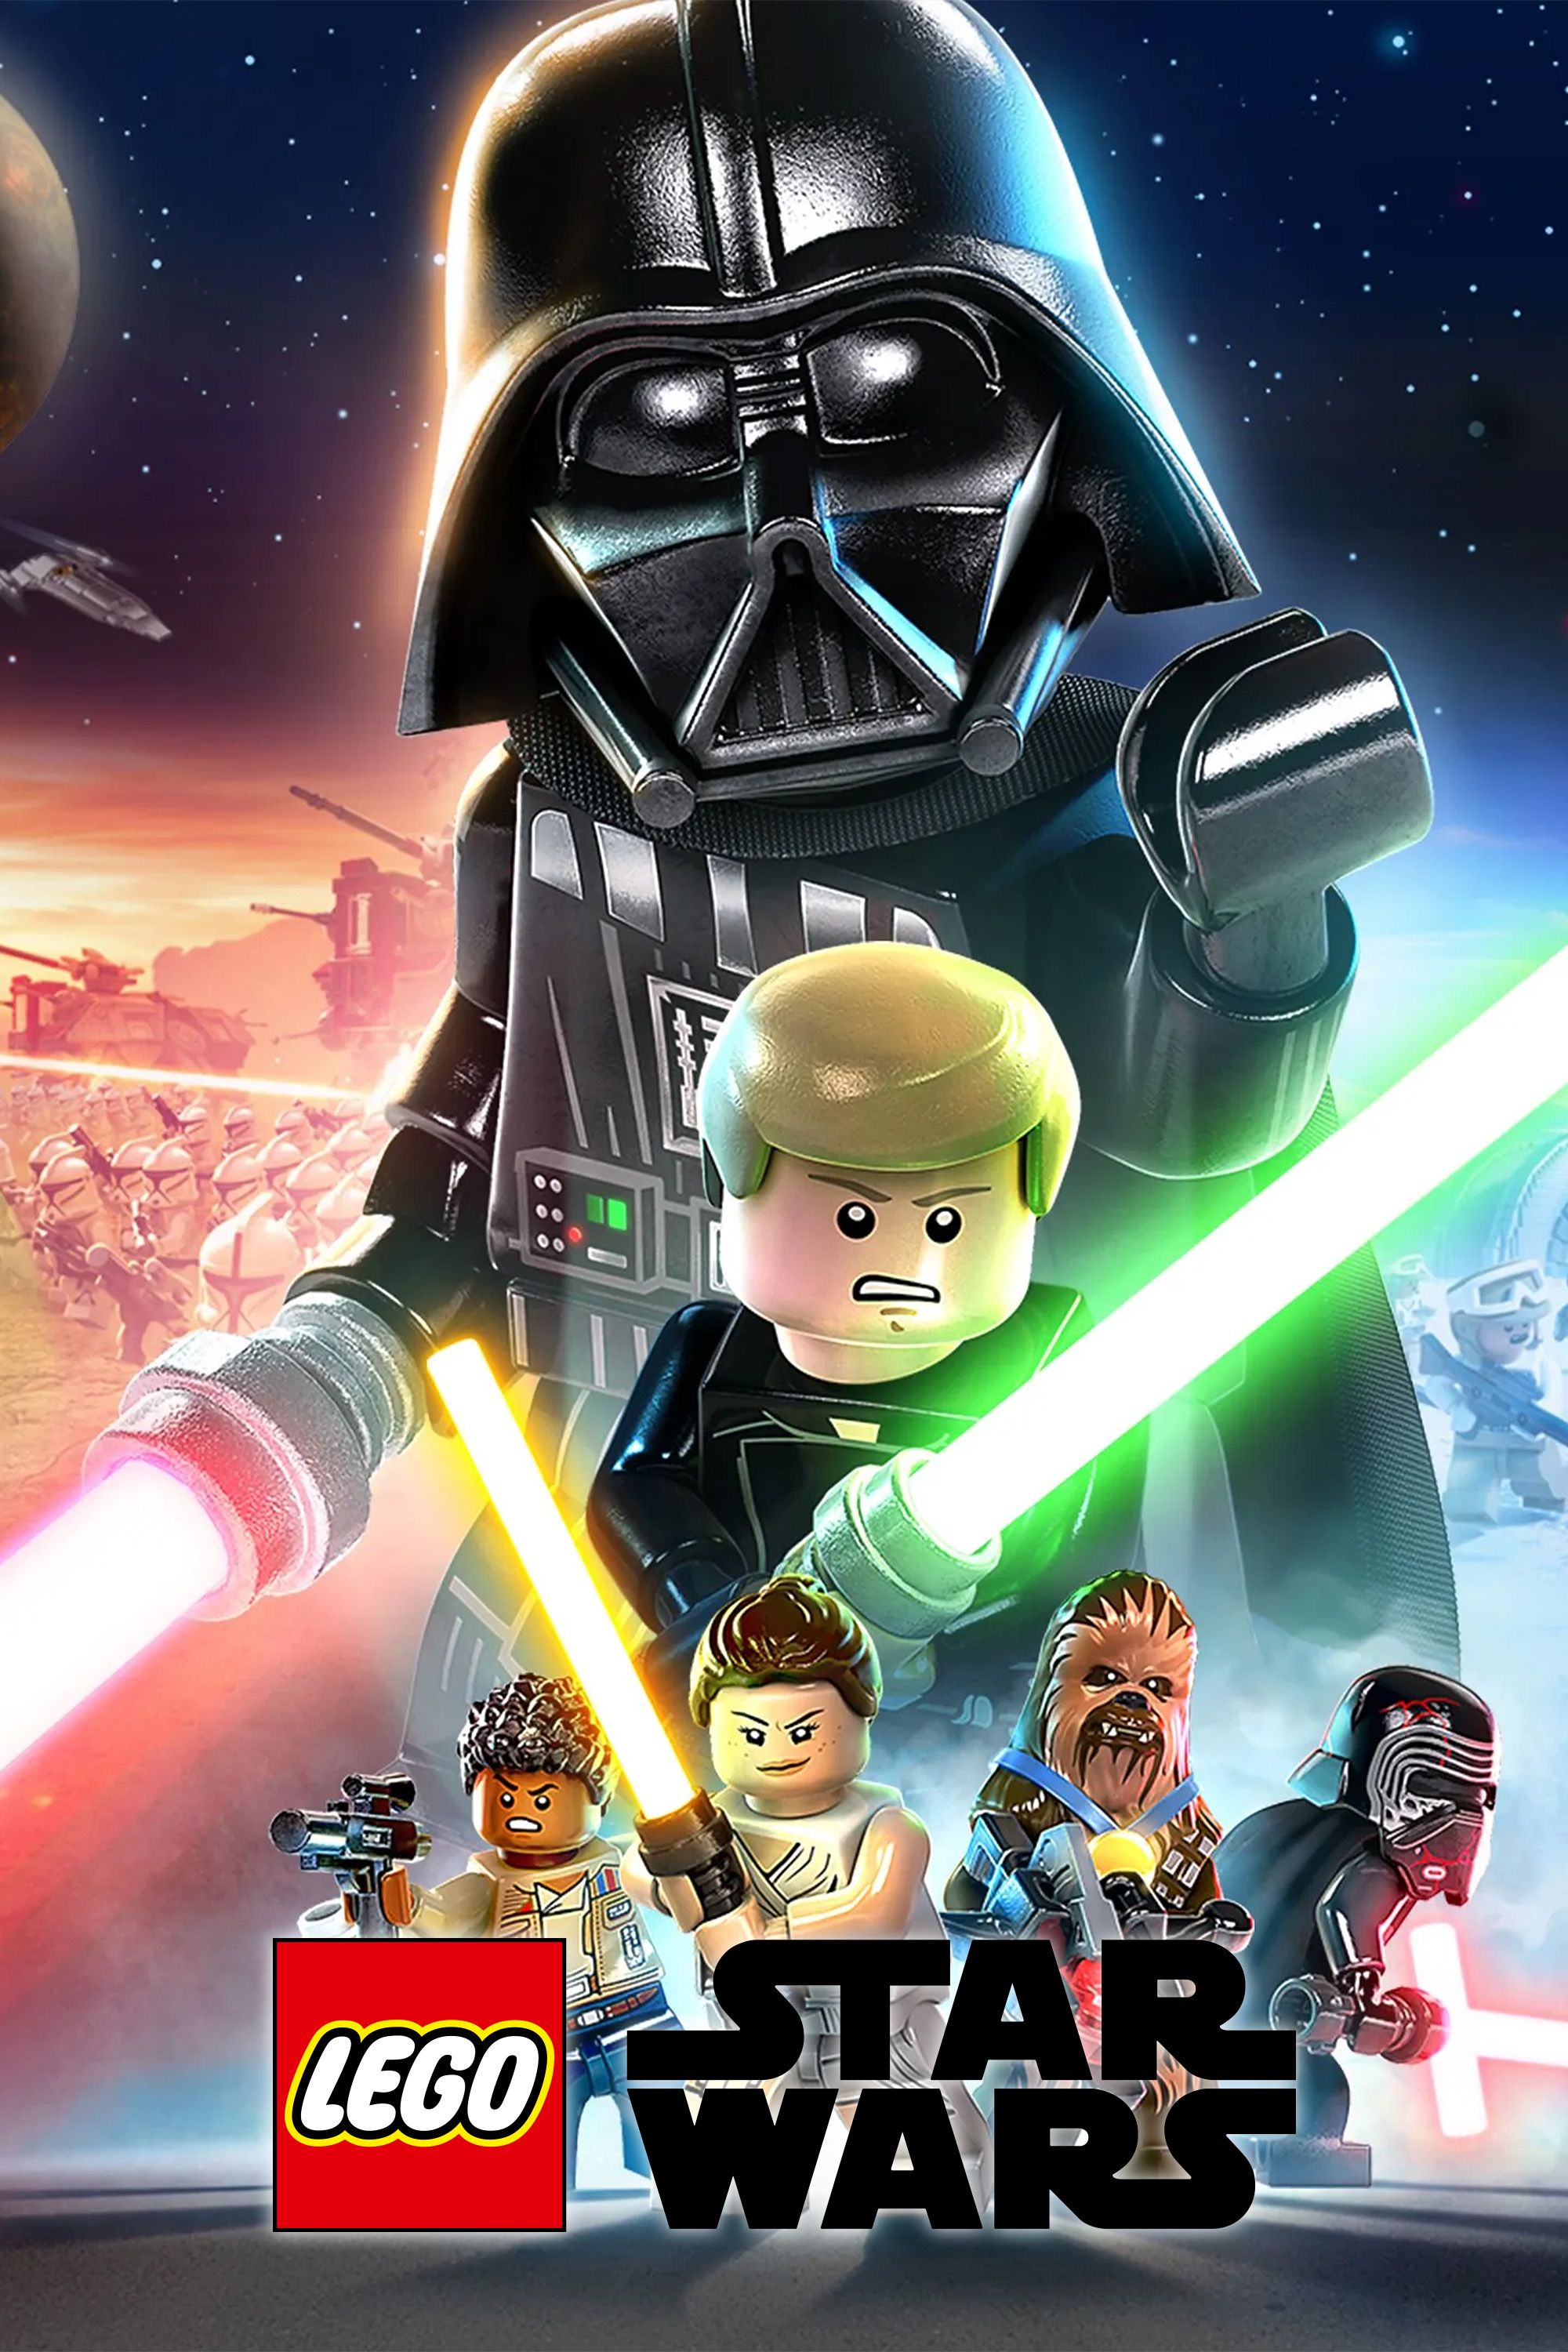 Lego Star Wars Game Rant